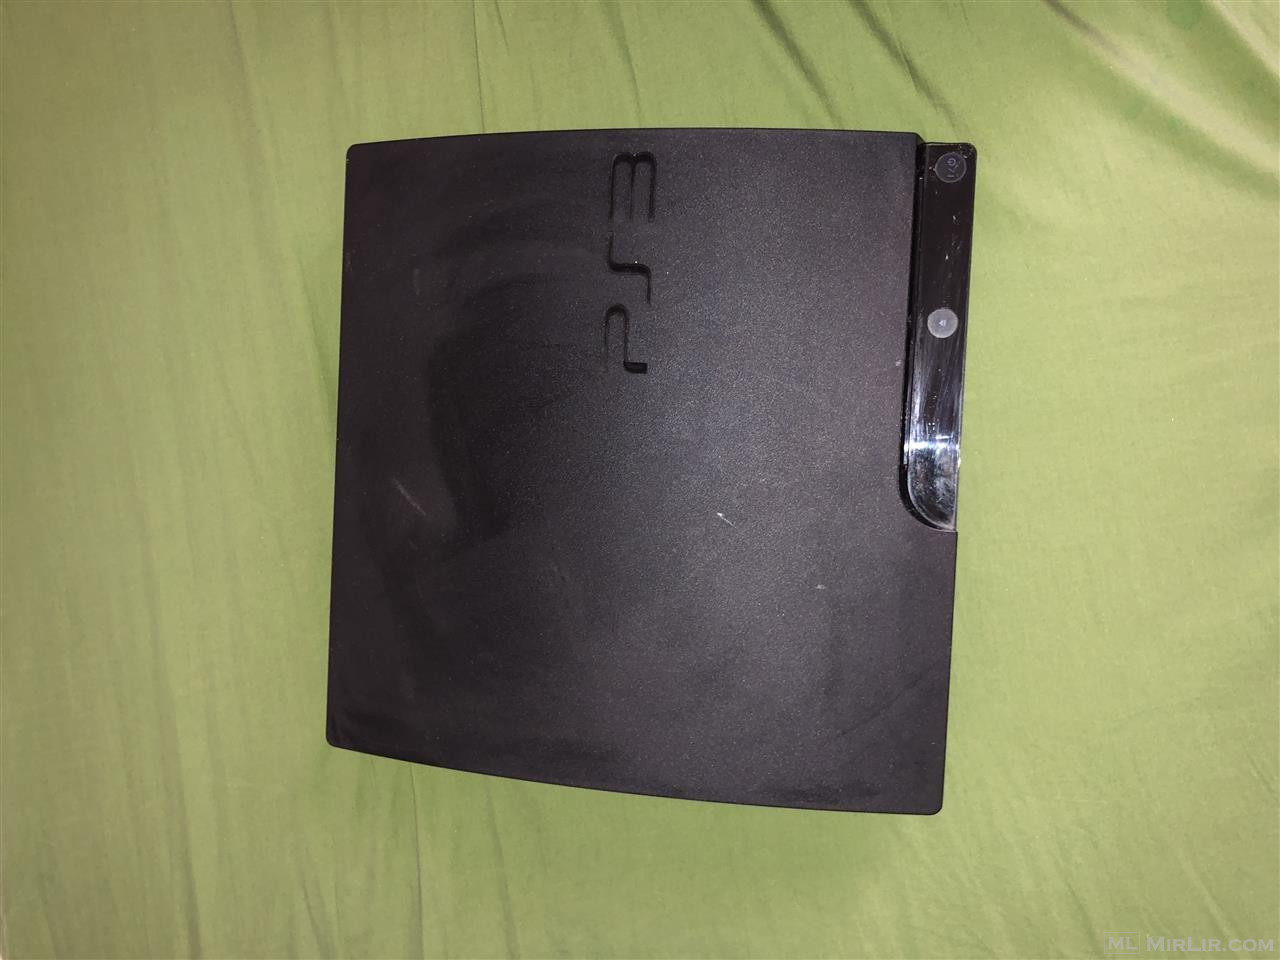 Shitet Ps3 PlayStation 3